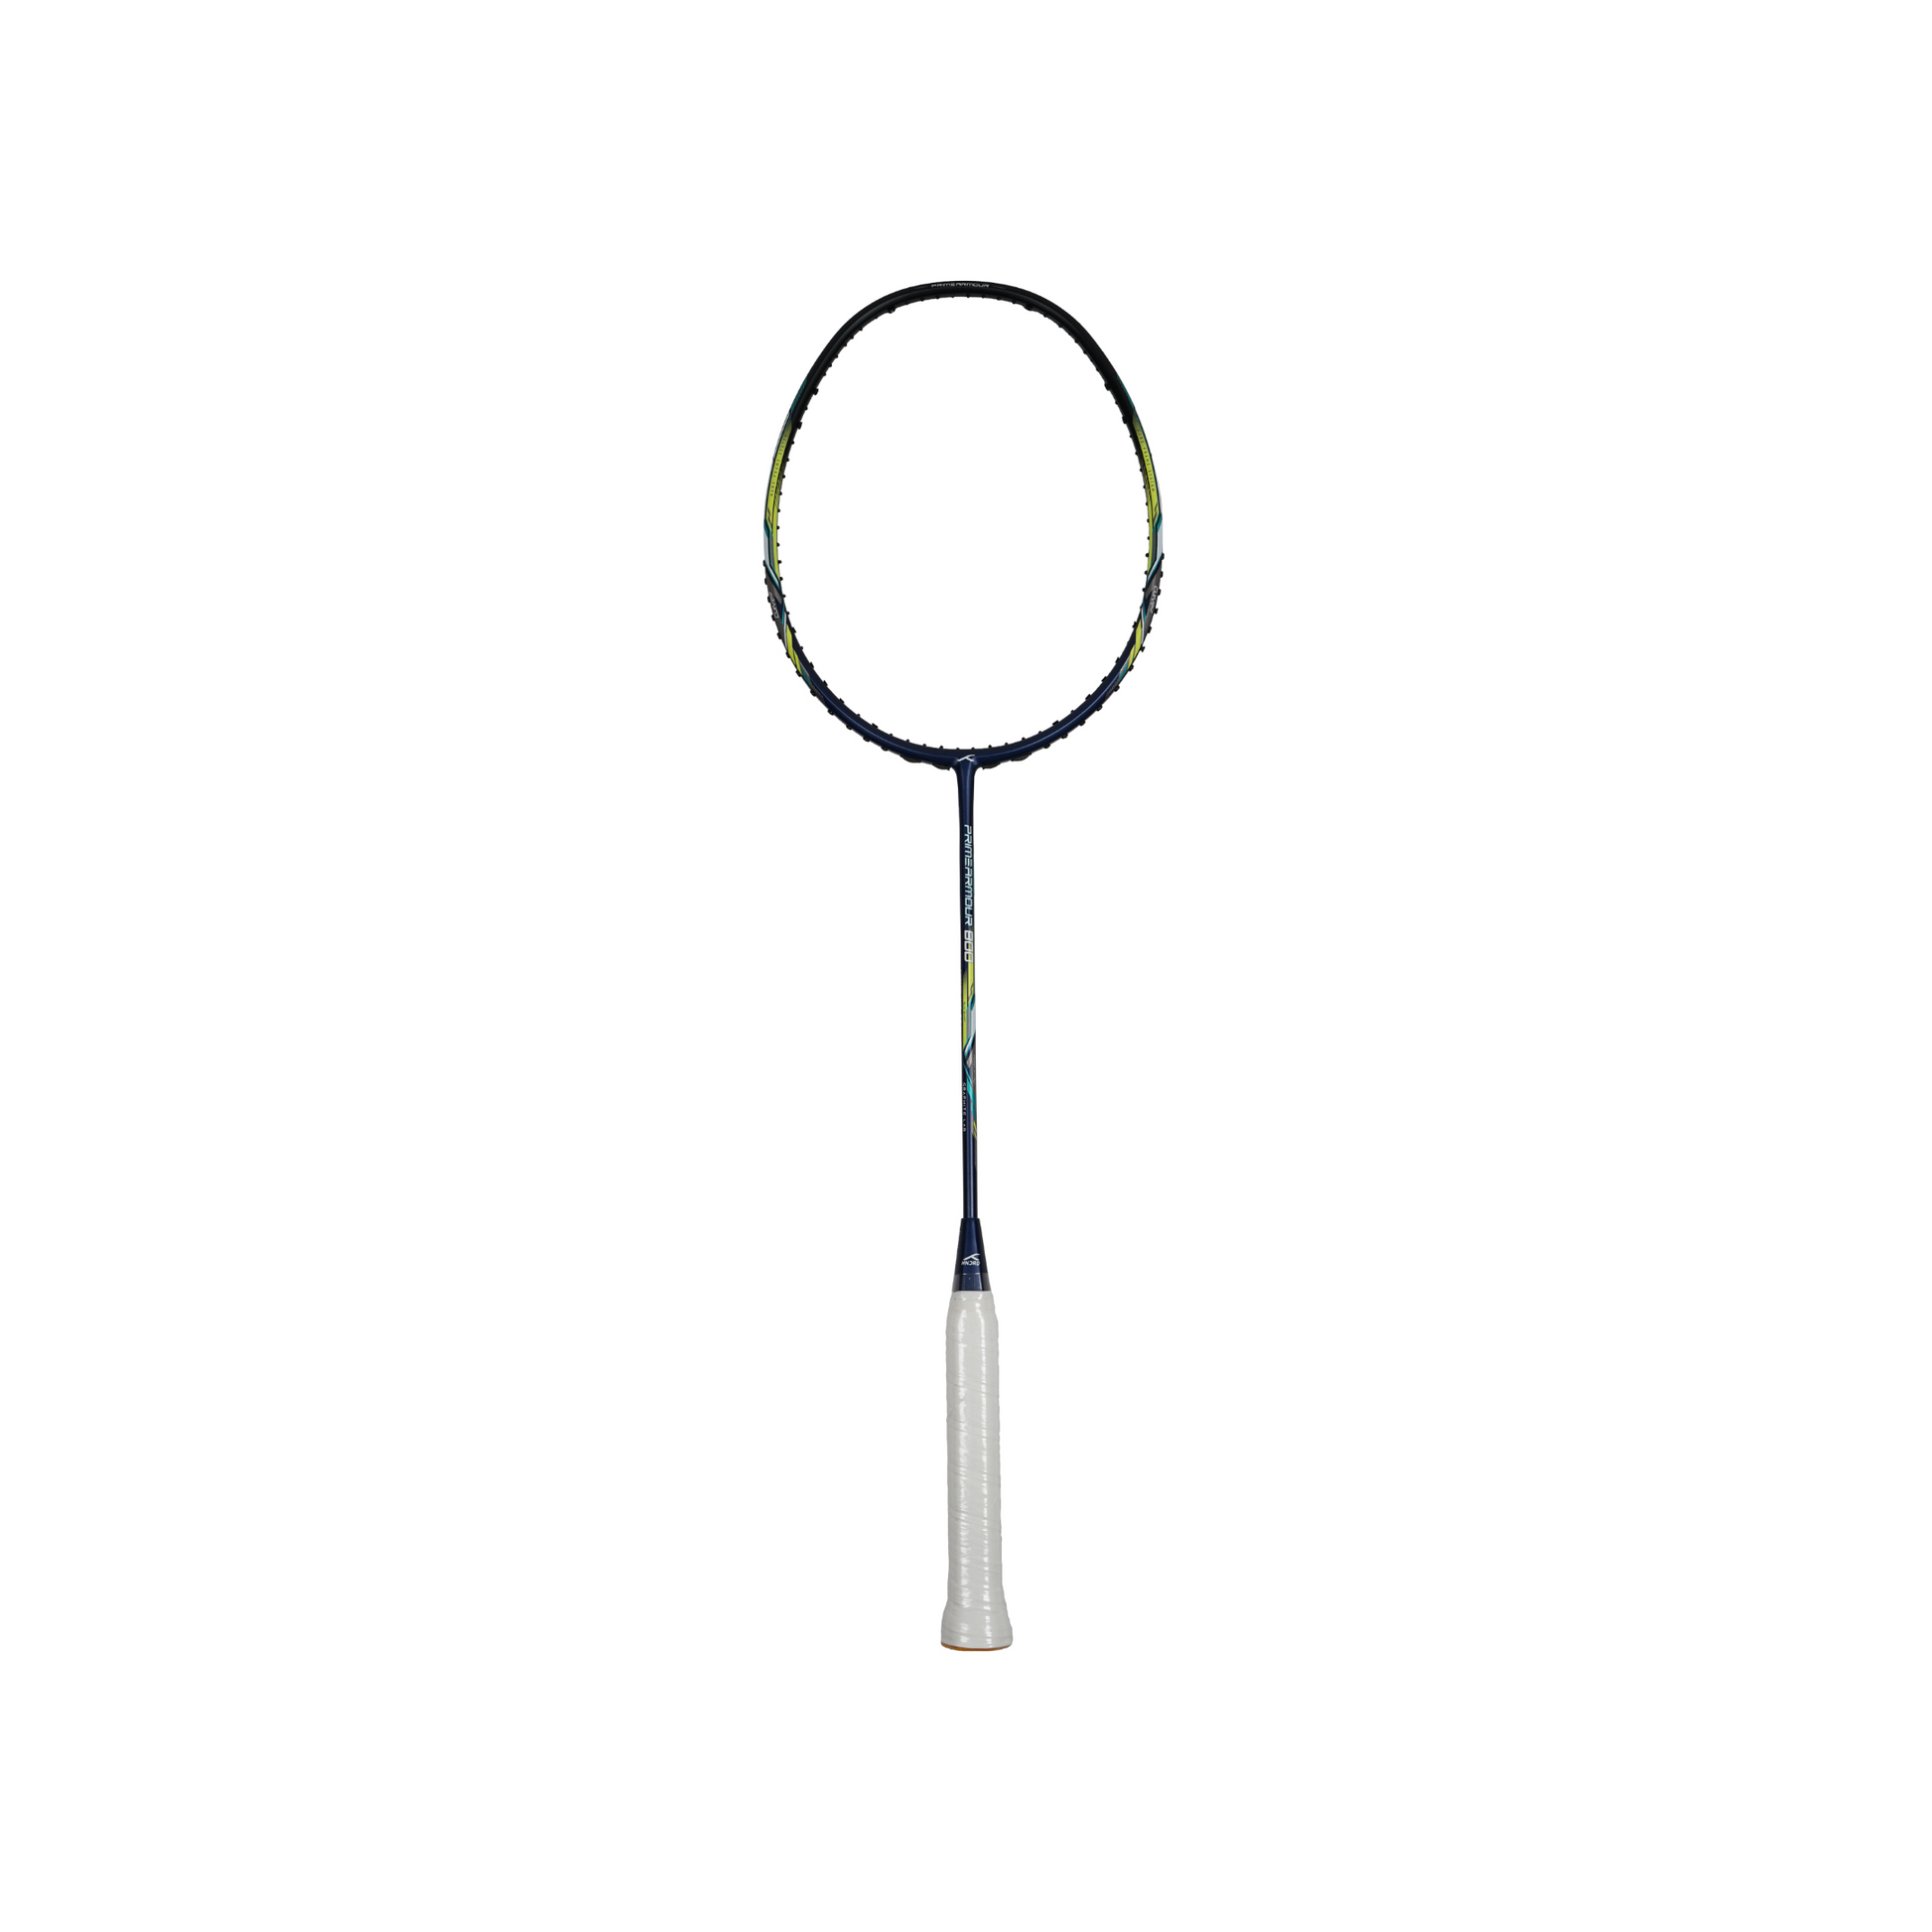 Raket Badminton Hundred Primearmour 800